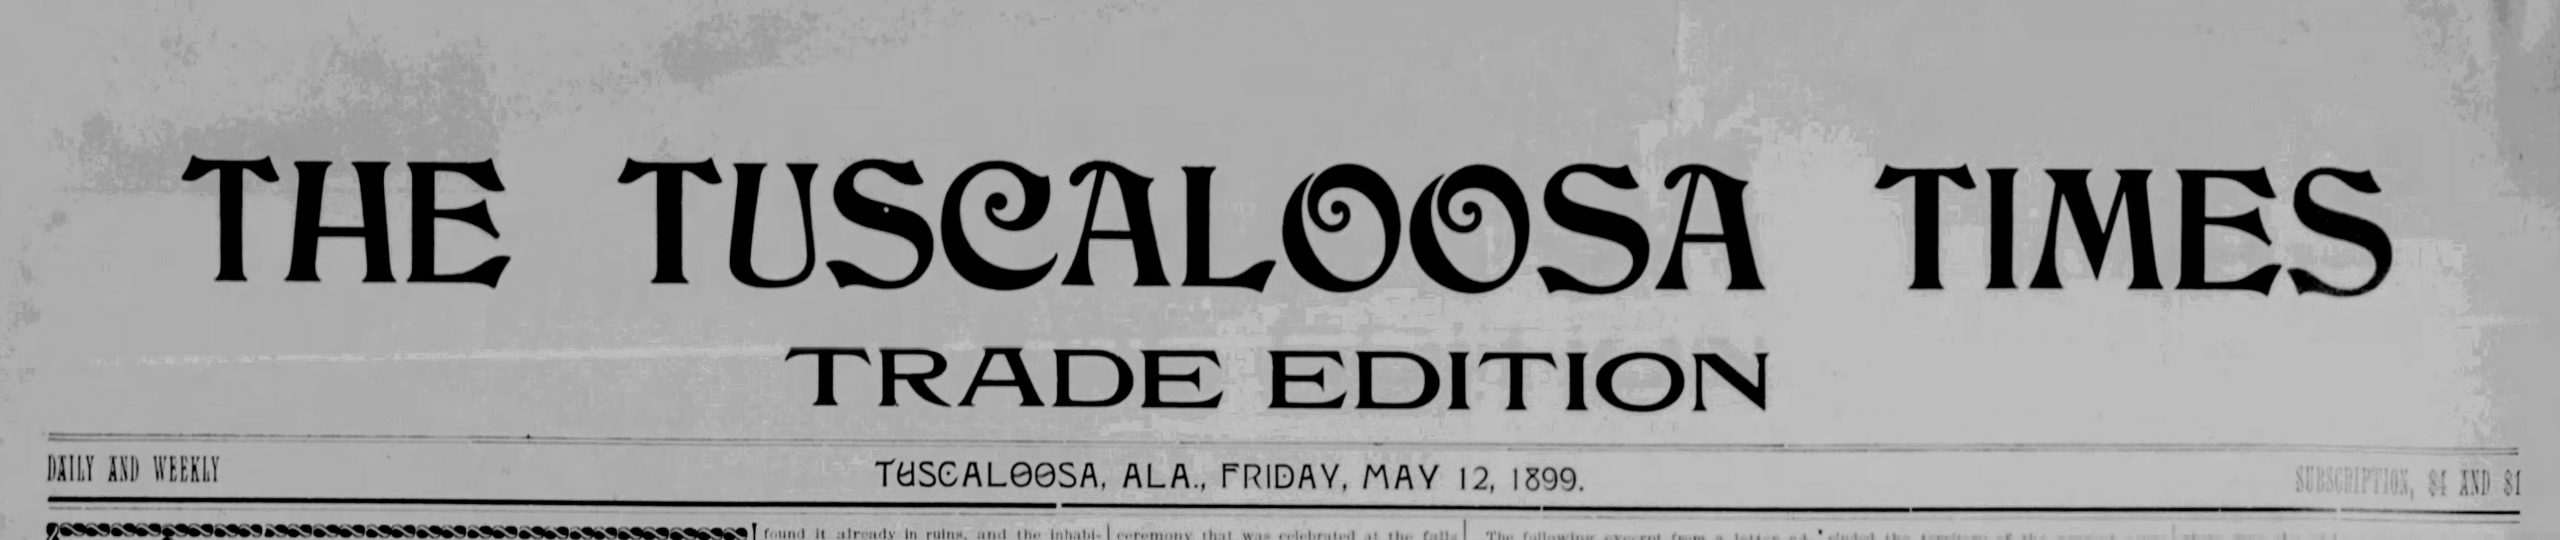 PATRON + 1899 News clipping about Tuscaloosa, Alabama citizen John S. Hanley